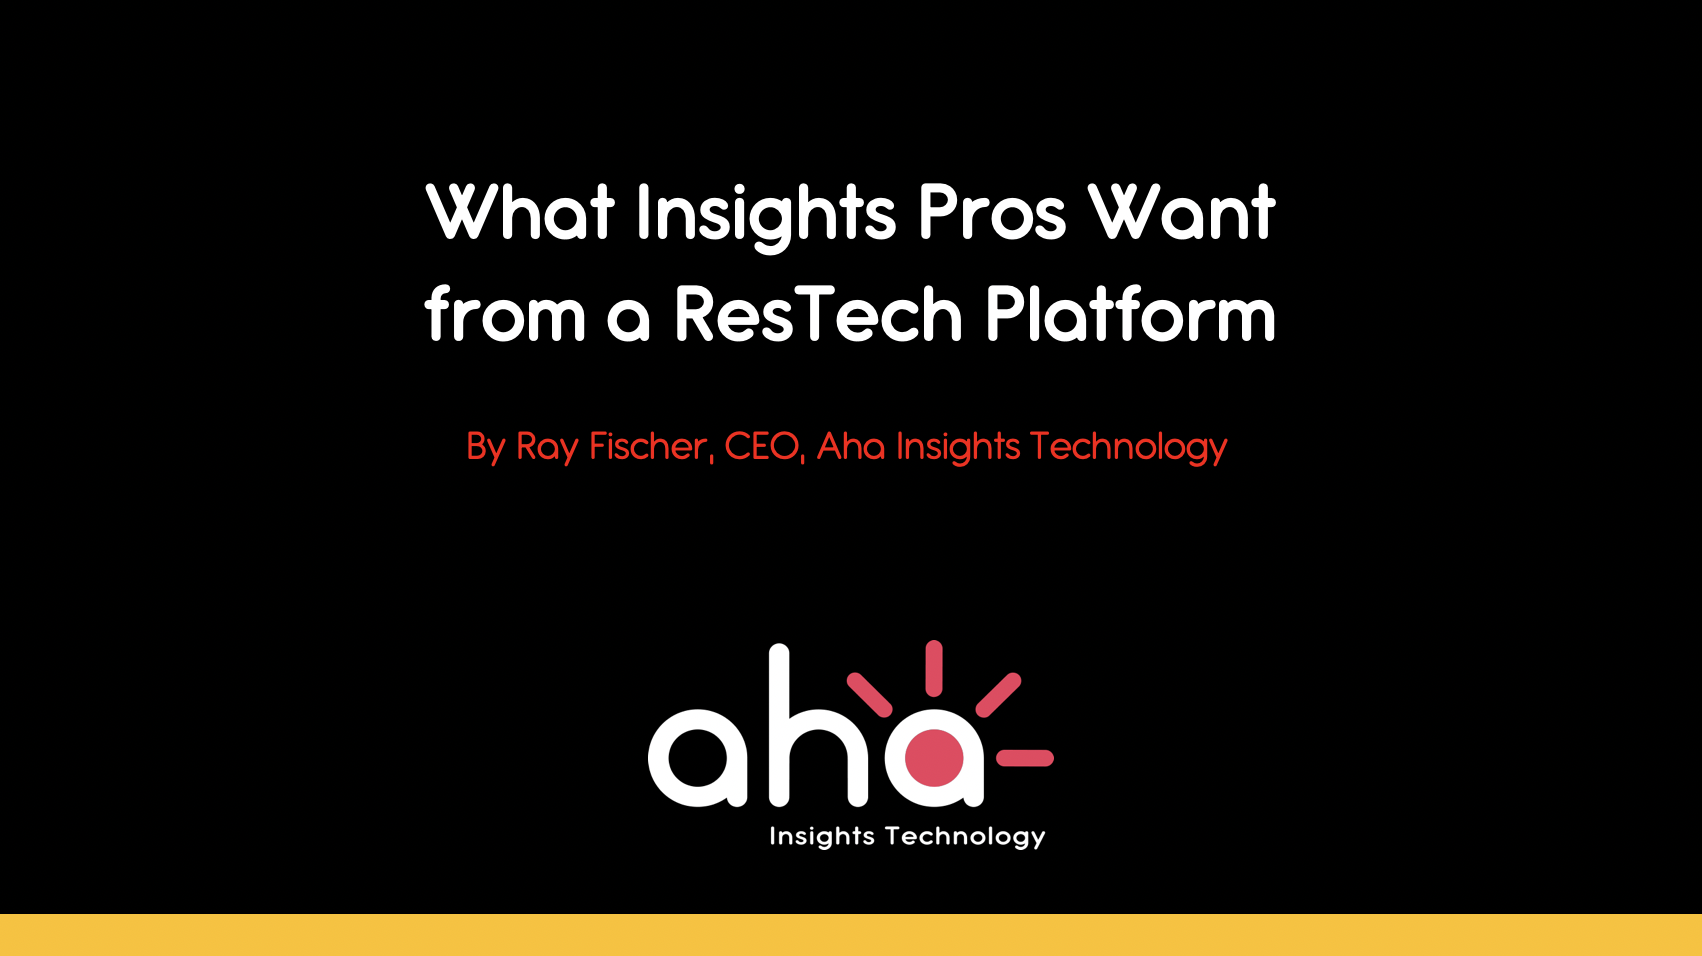 ResTech Insights Platform AHA